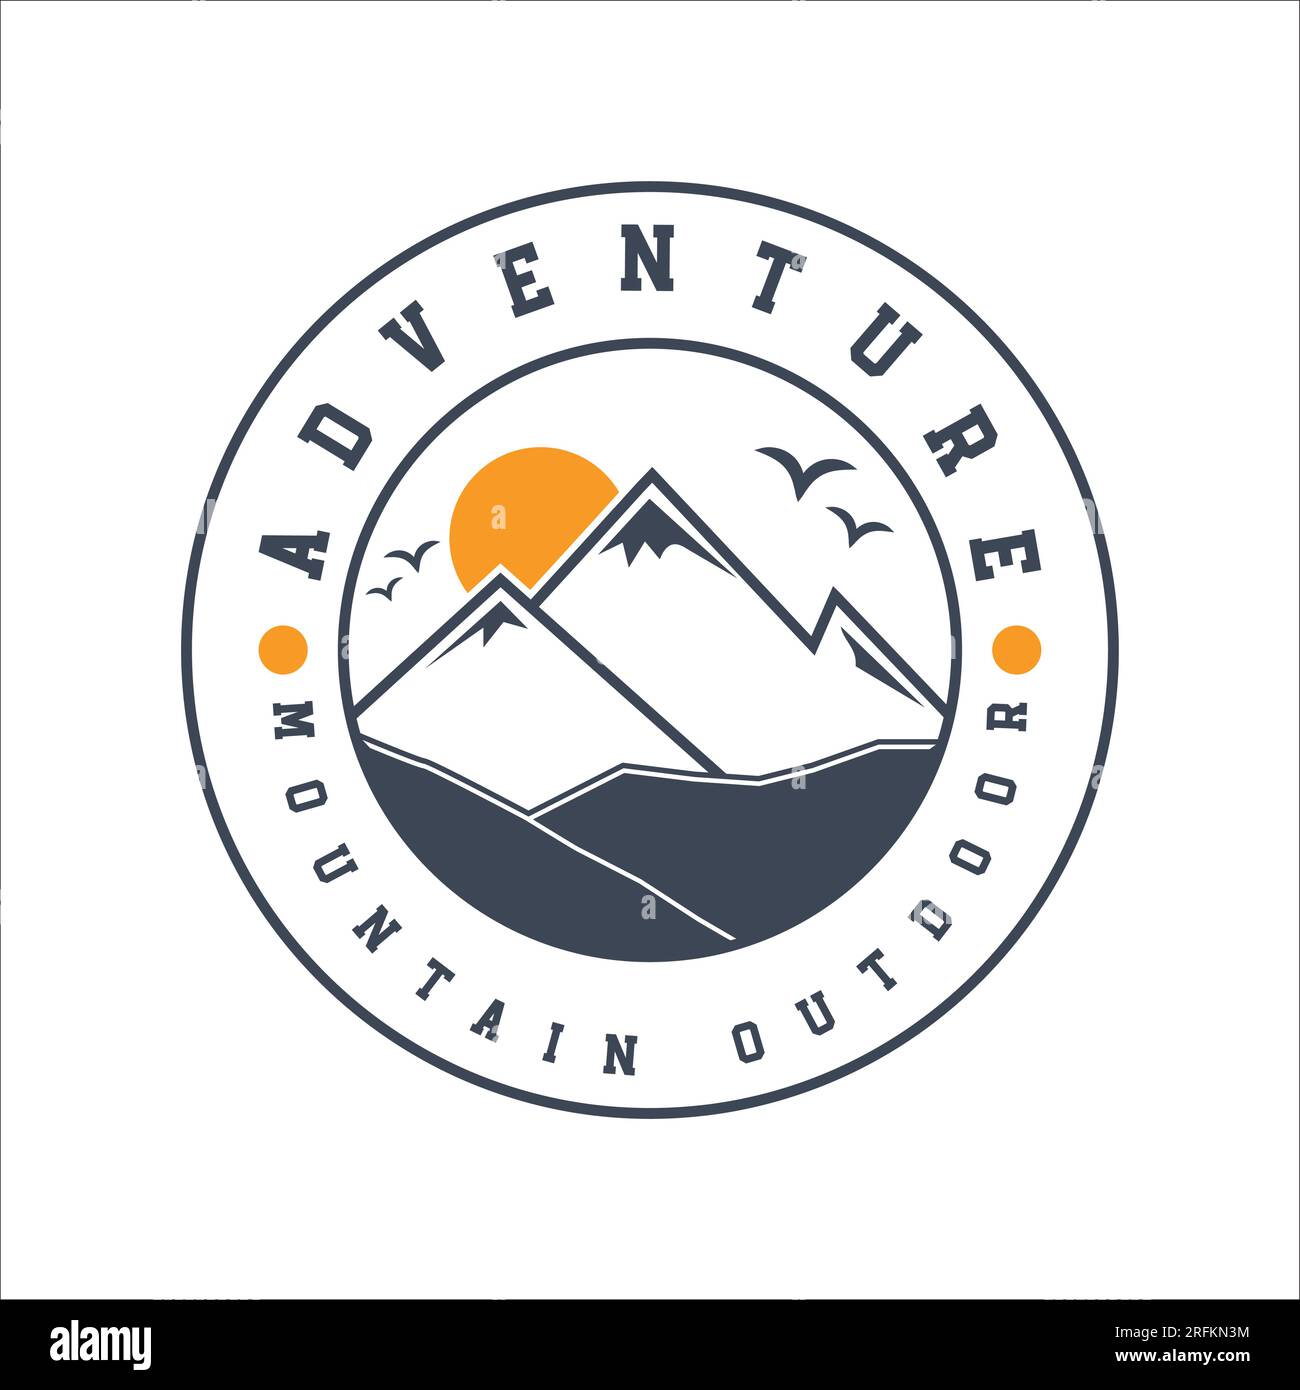 Adventure Mountain Logo Design Tourist Outdoor Adventure Stock Vector